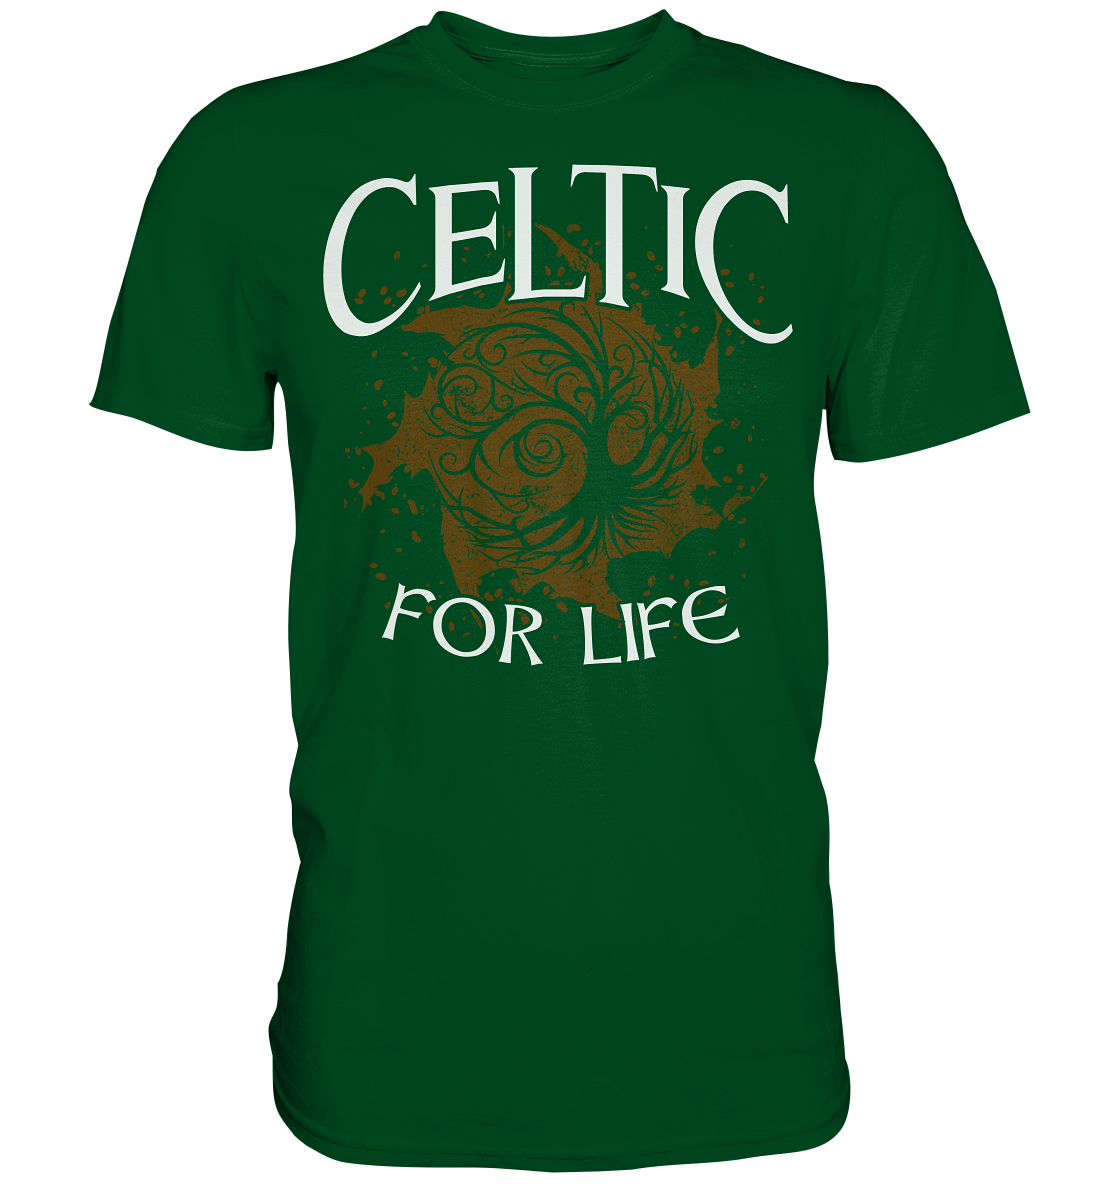 Celtic "For Life" - Premium Shirt